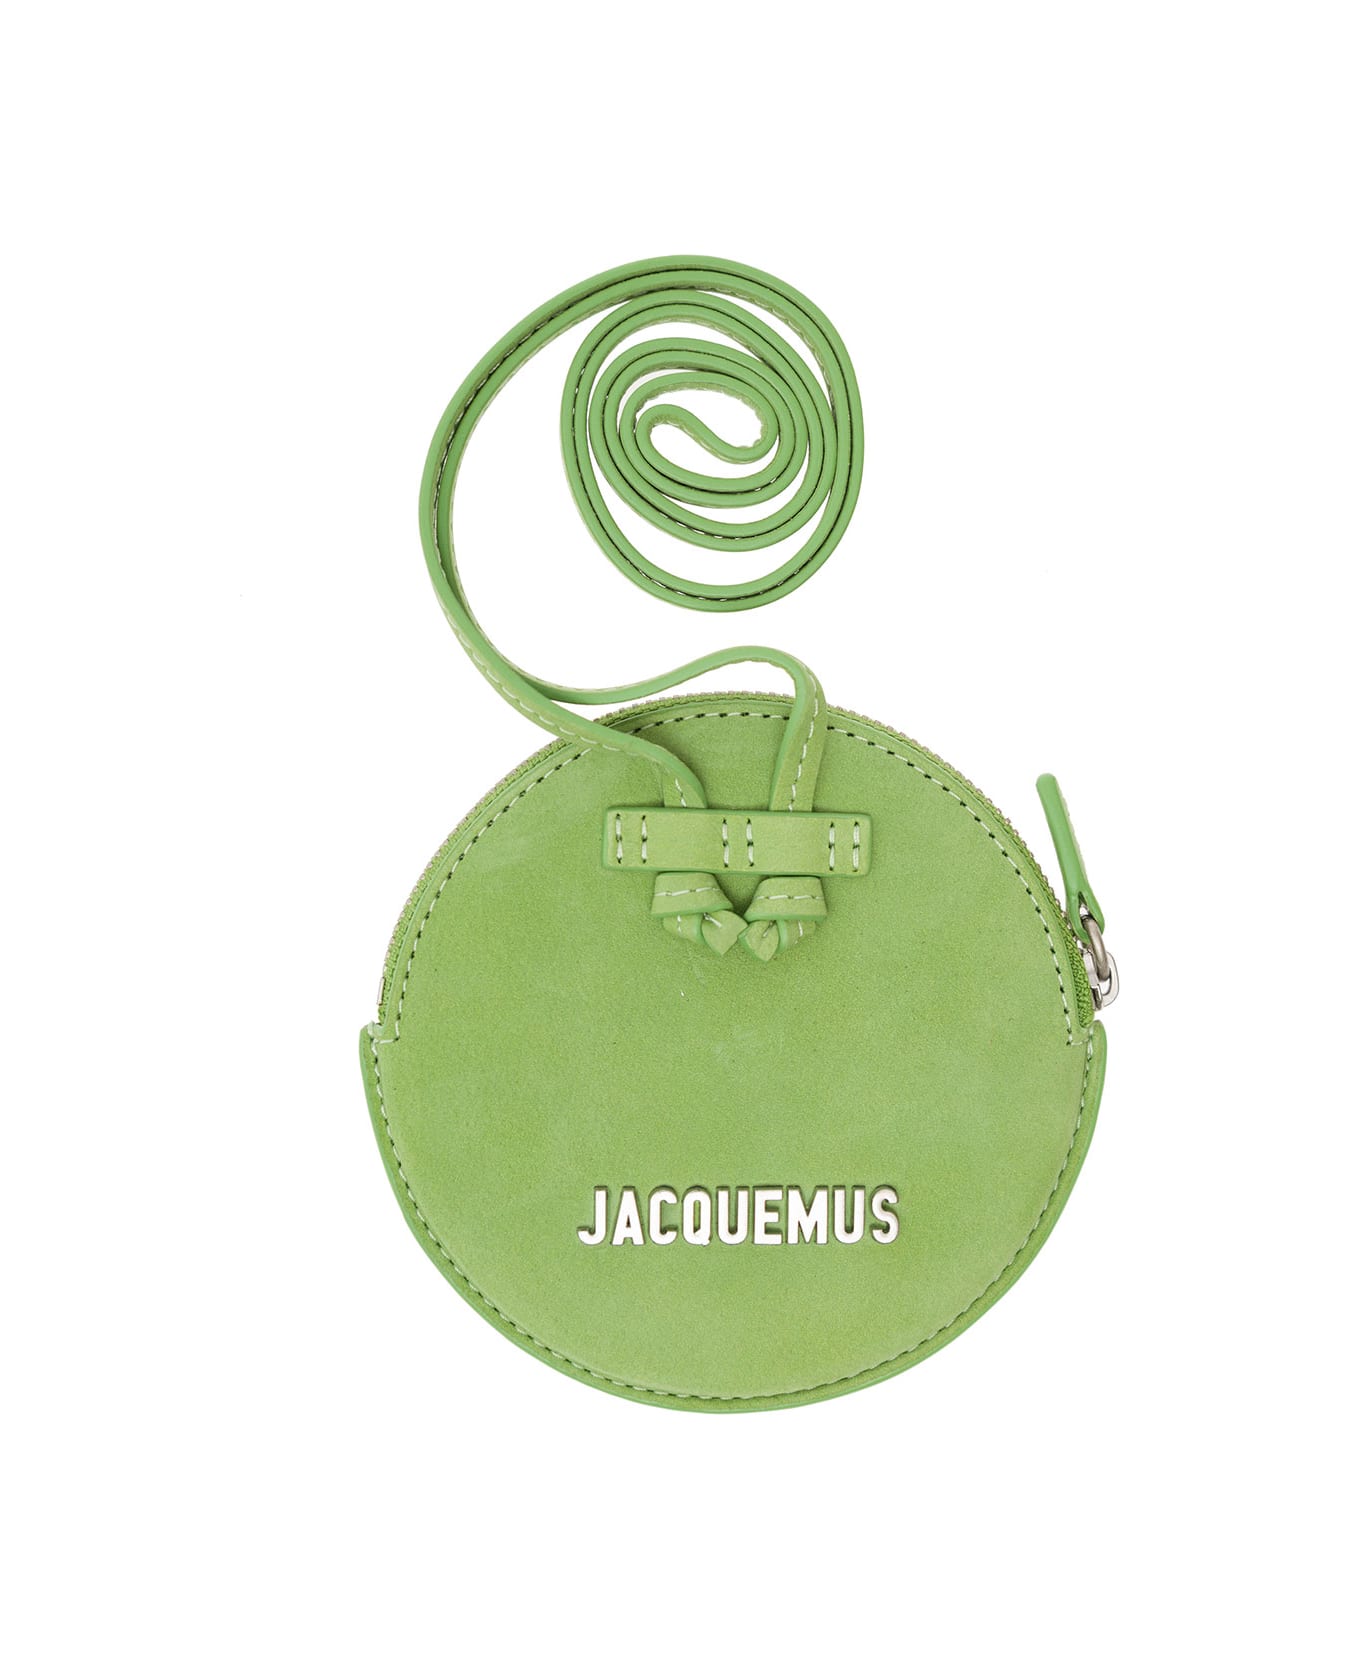 Jacquemus Clutch - 550